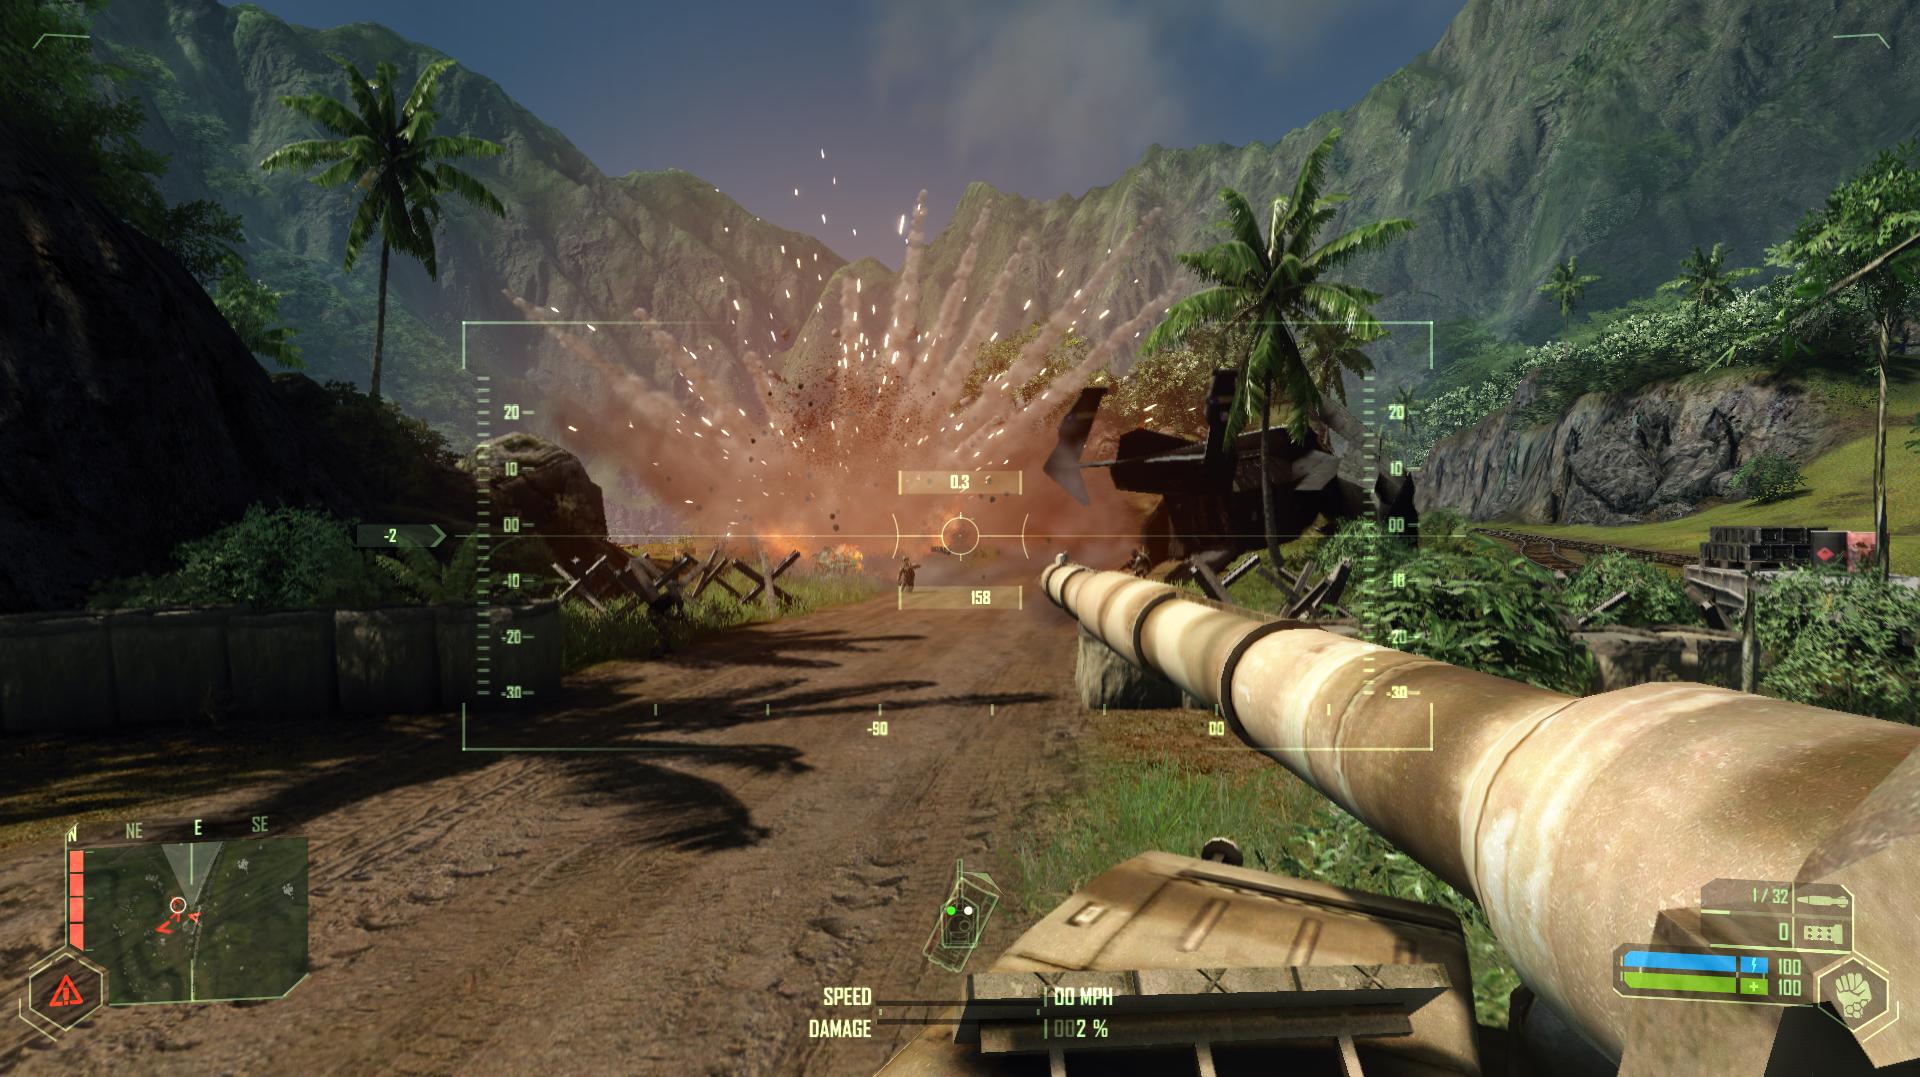 Crisis screenshots from its original release